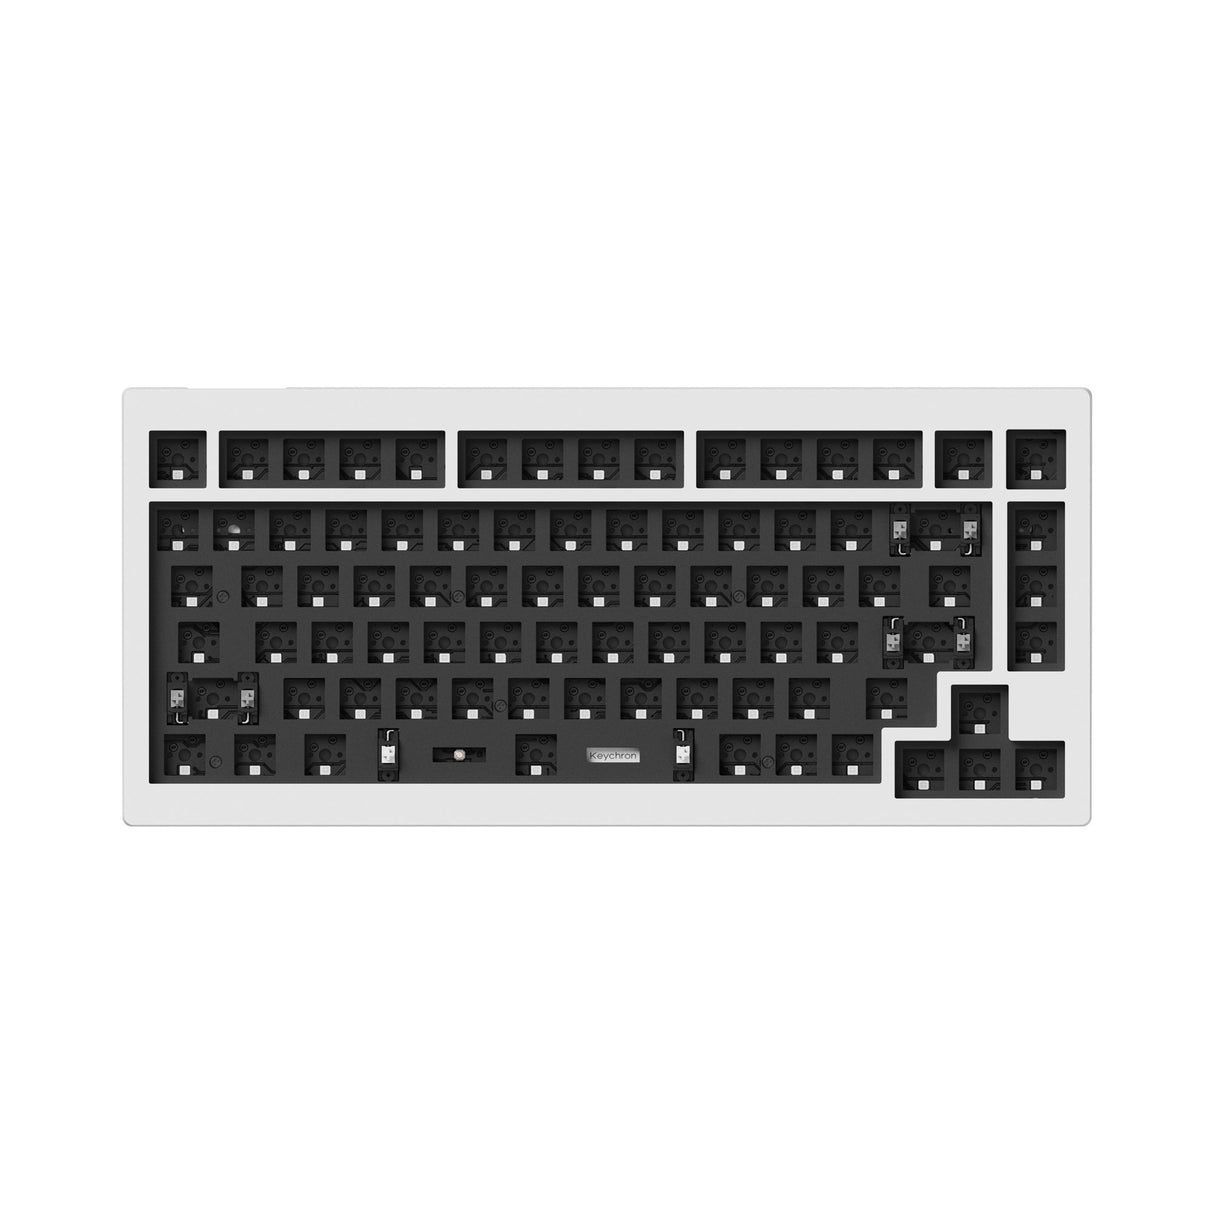 Keychron V1 QMK VIA custom mechanical keyboard 75% layout shell white for Mac Window Linux barebone